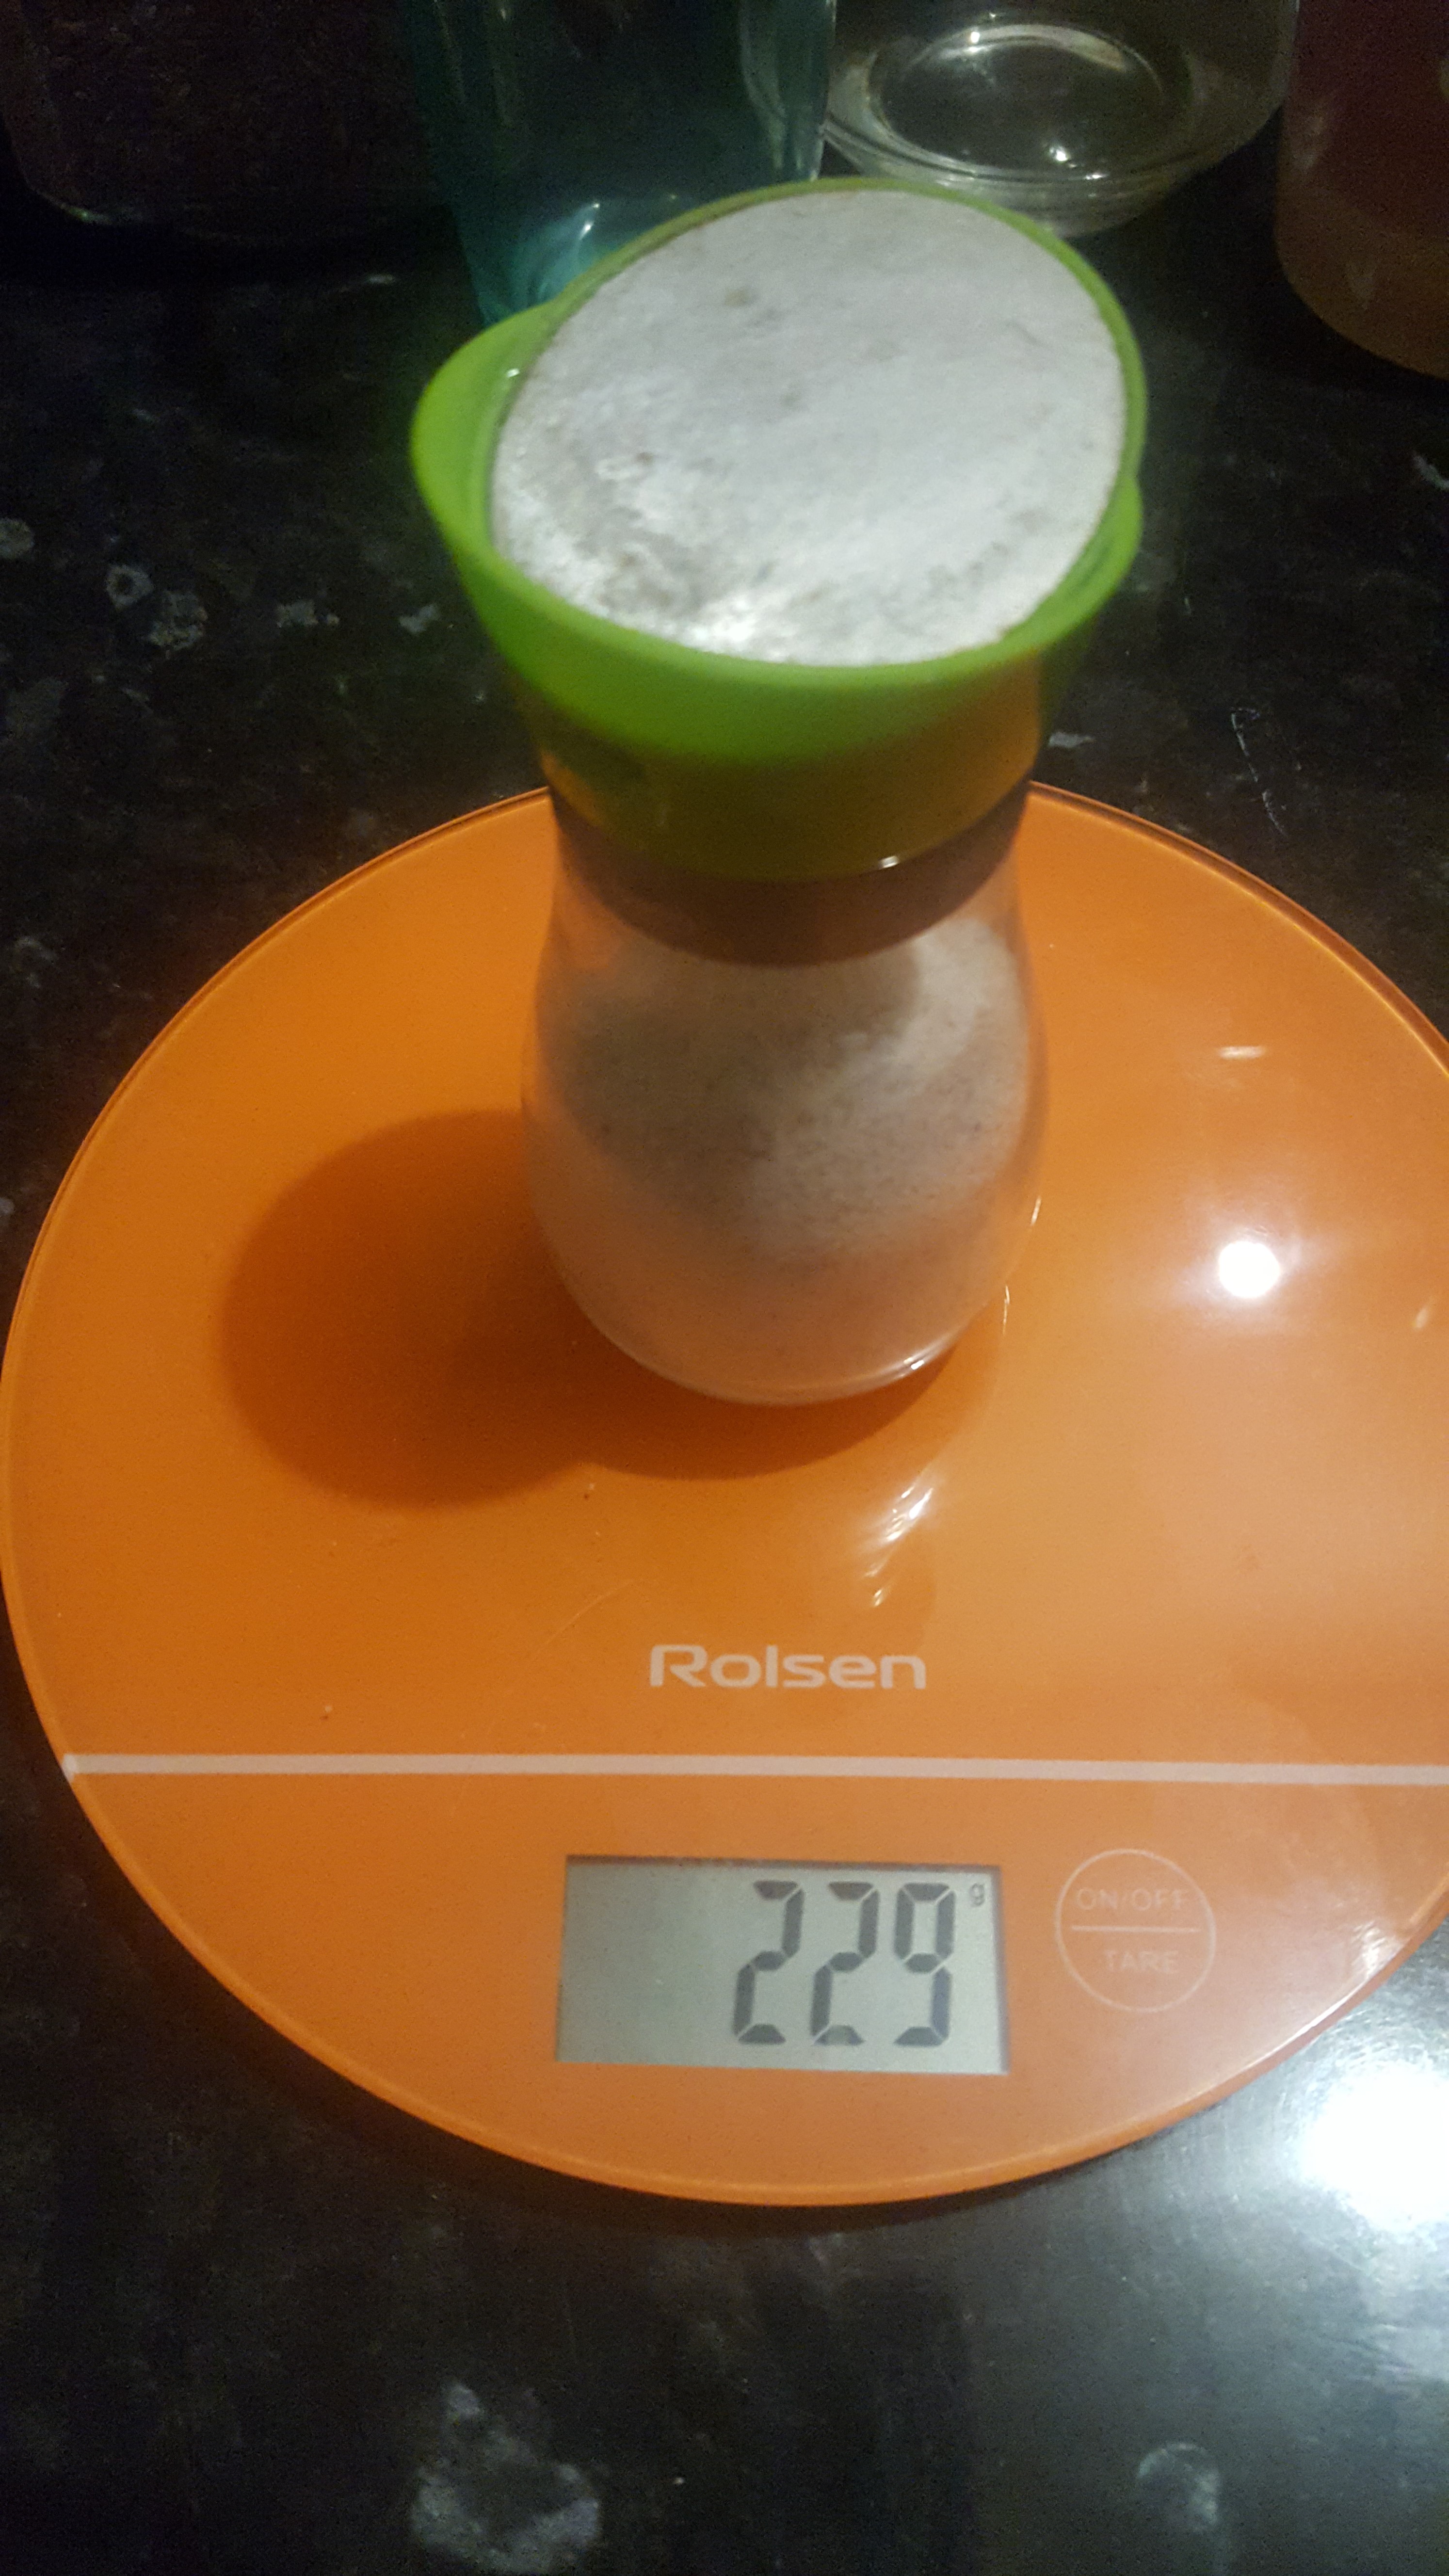 How much does a salt shaker weigh?